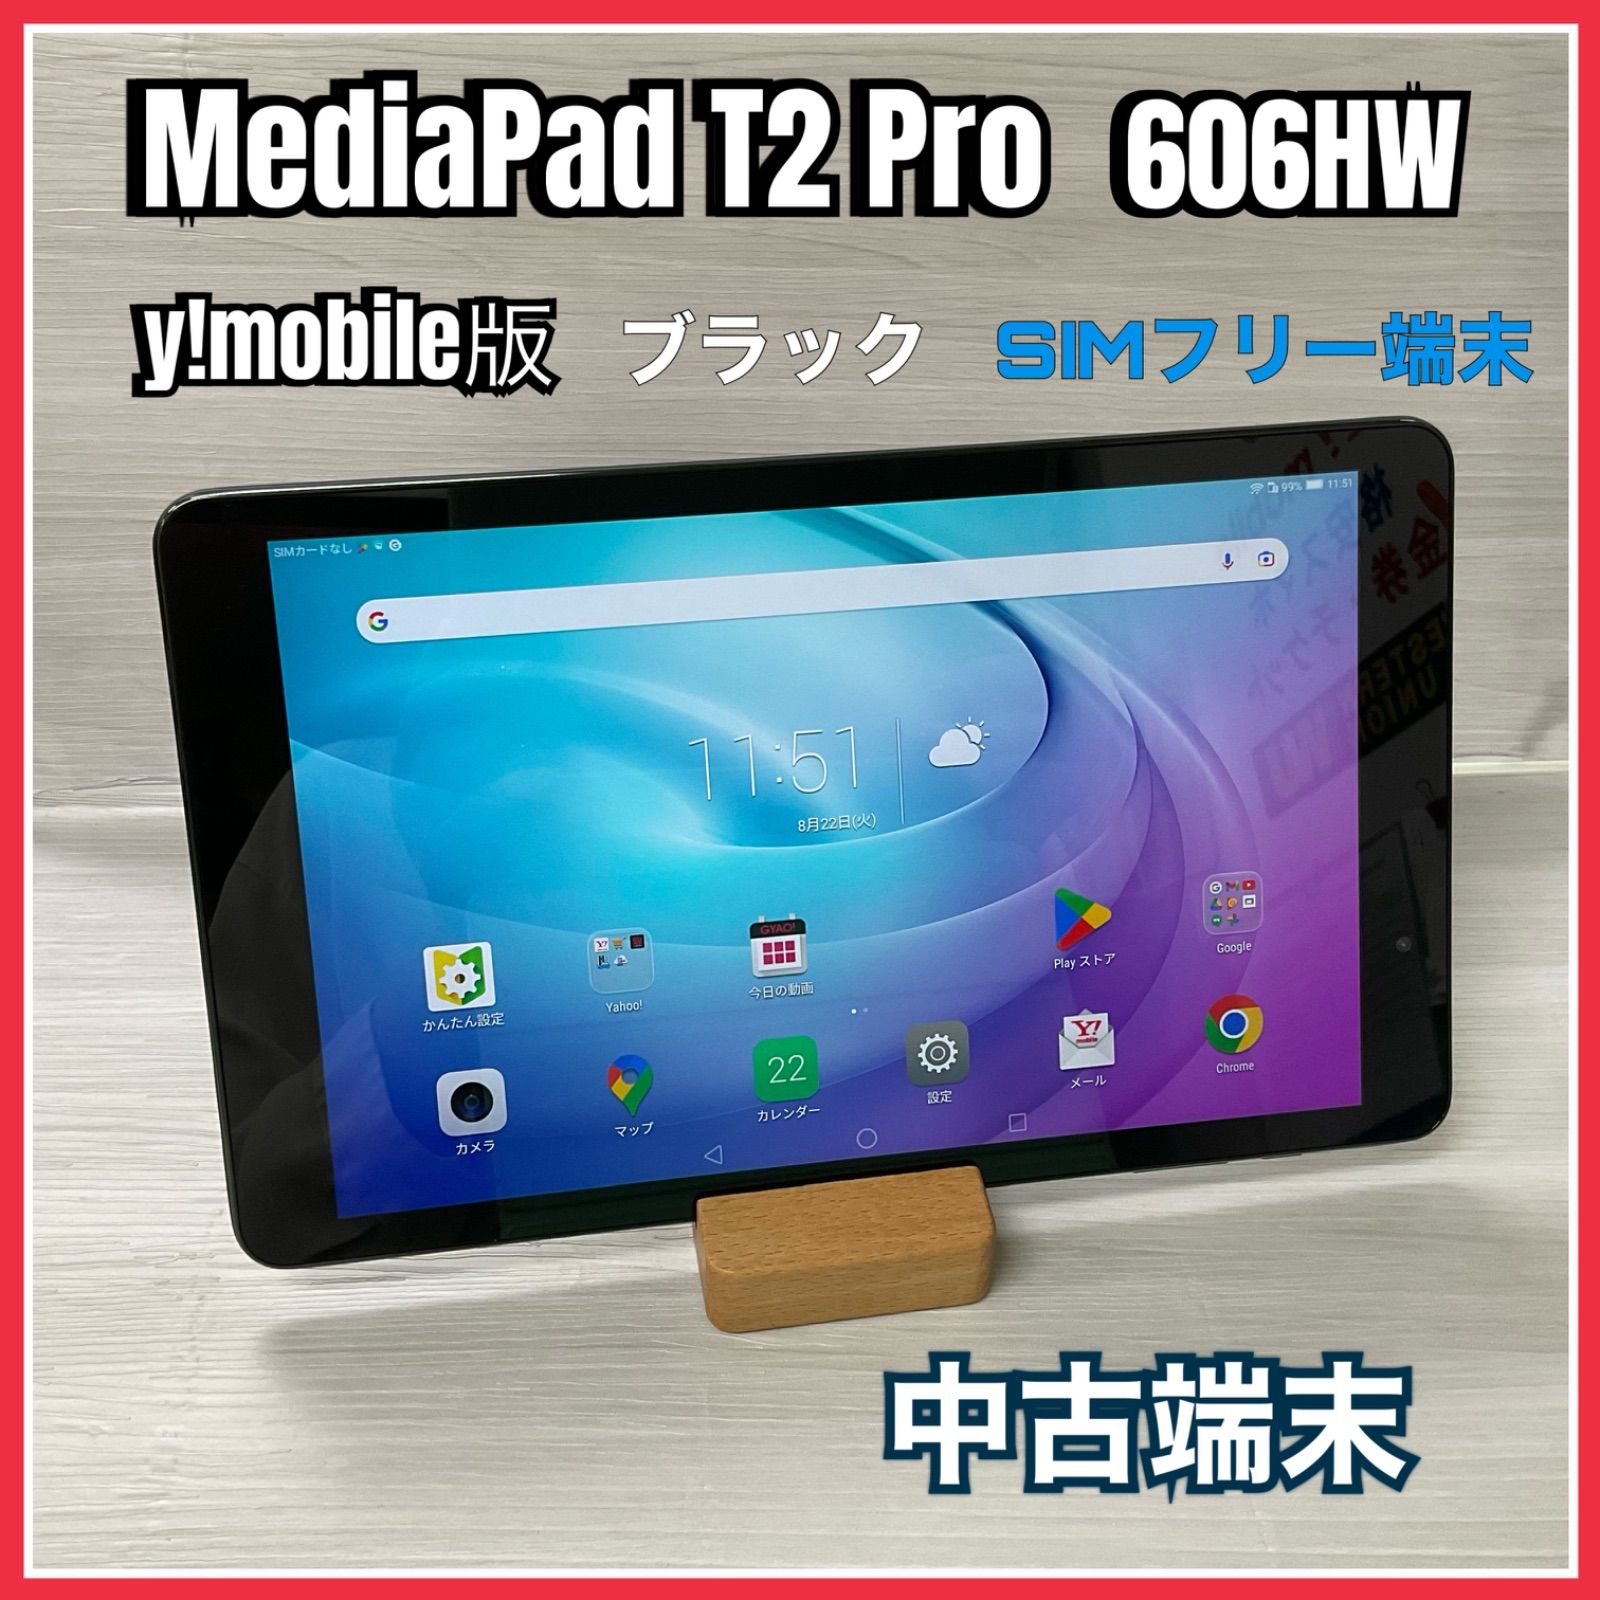 MediaPad T2 Pro - 606HW / HUAWEI 【中古】- SIMロック解除済 - y!mobile版 - #1216